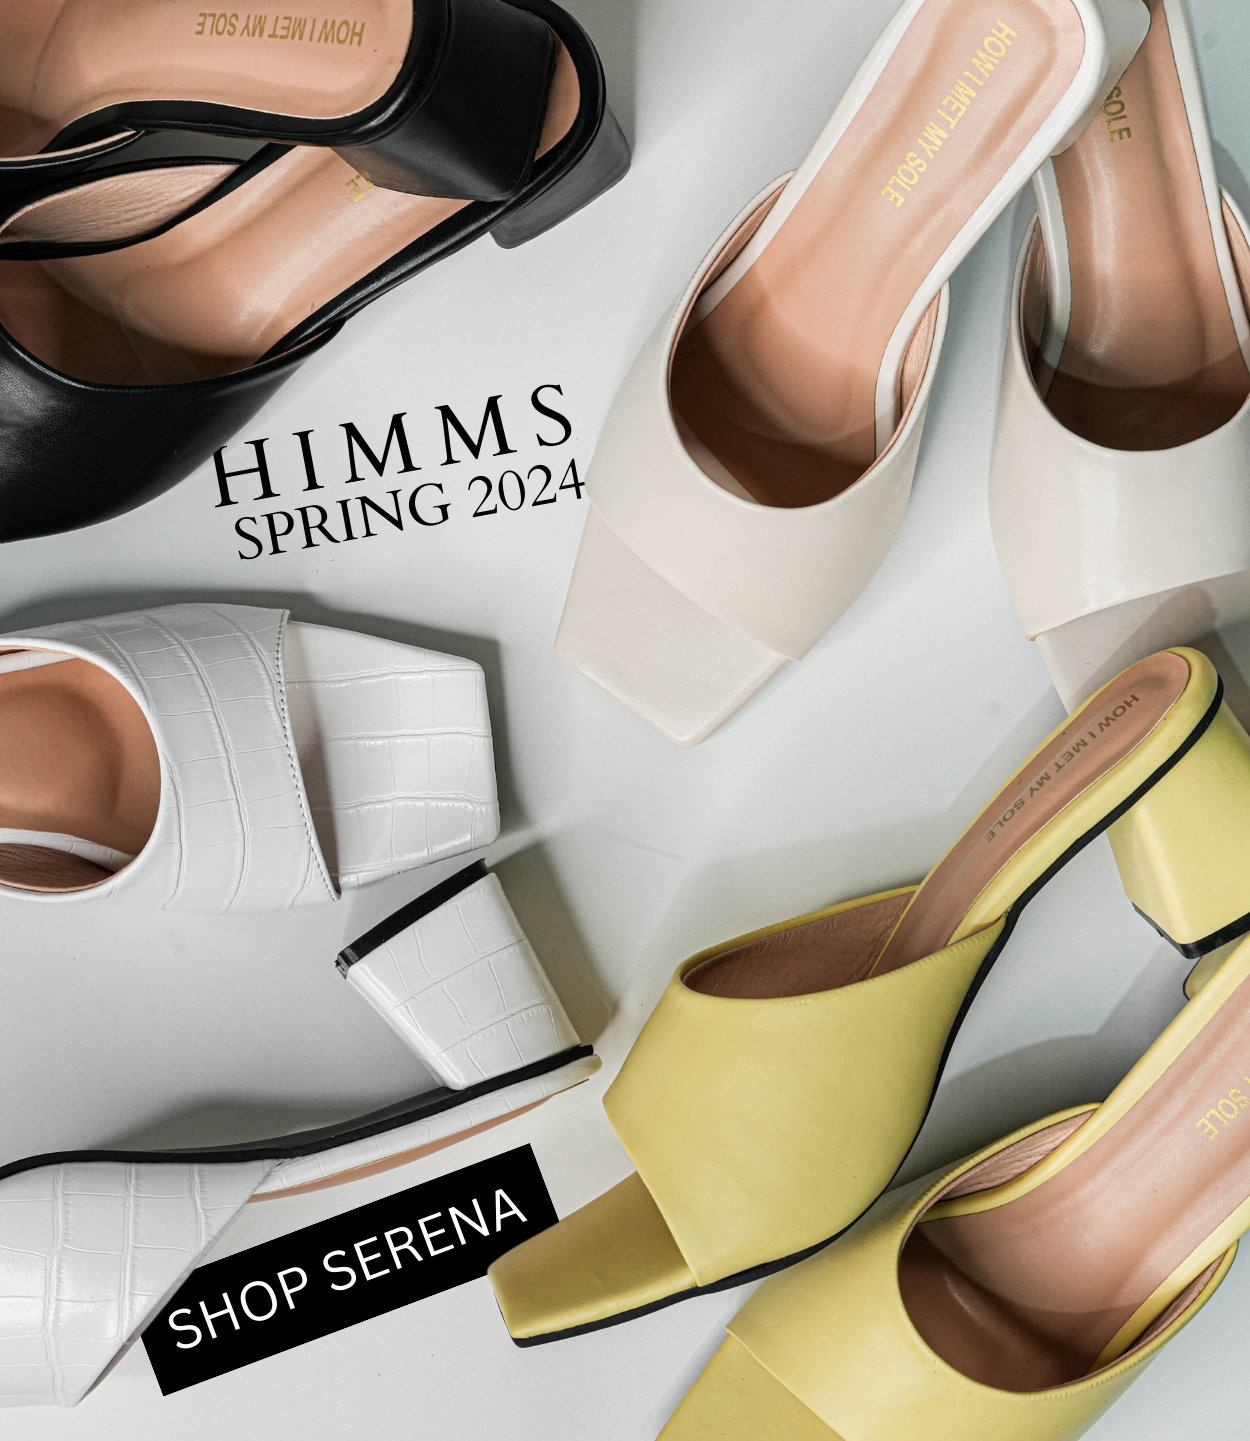 HIMMS Spring 2024 - Serena Open Toe Heels Banner - Mobile 